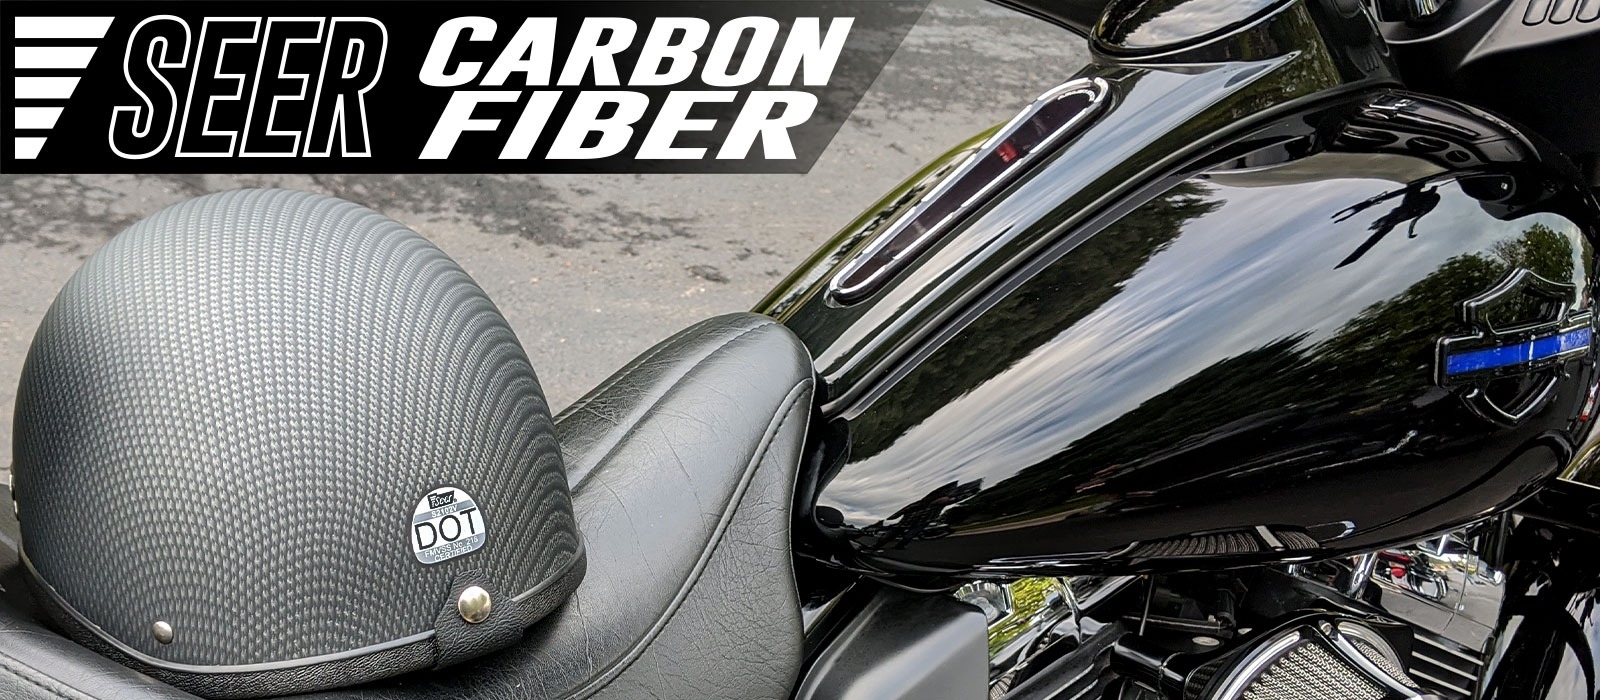 Super Seer Carbon Fiber Motorcycle Half Helmet